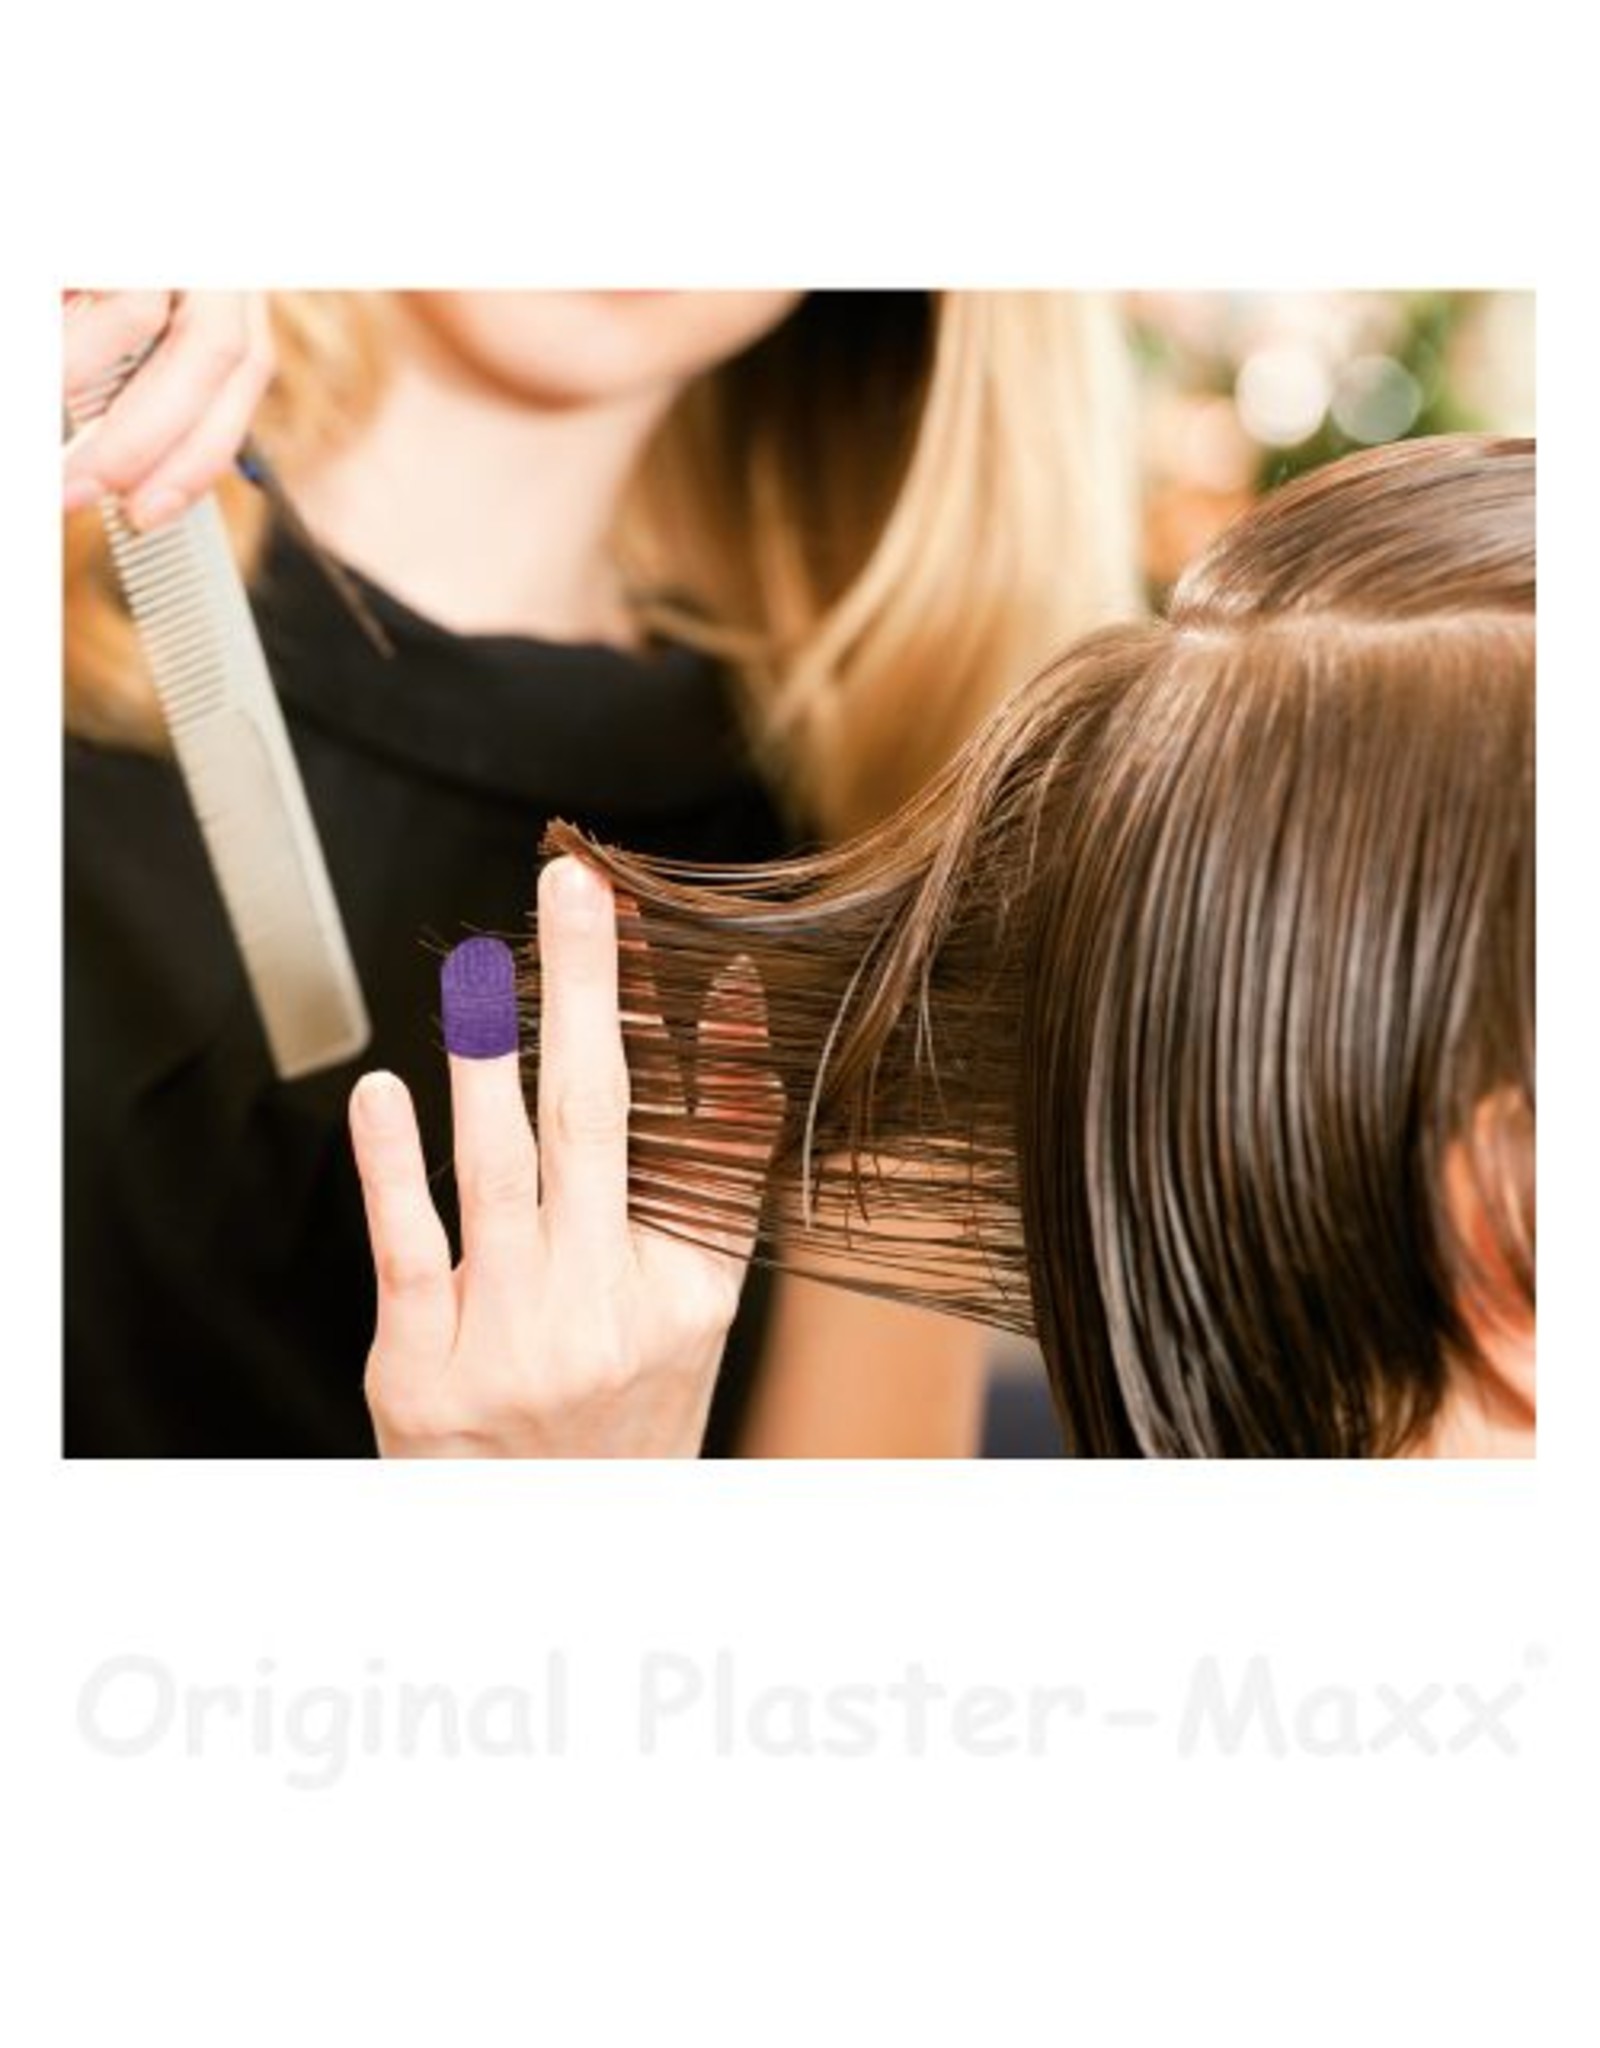 Plaster-Maxx Plaster-Maxx - Valueset 3xBlue